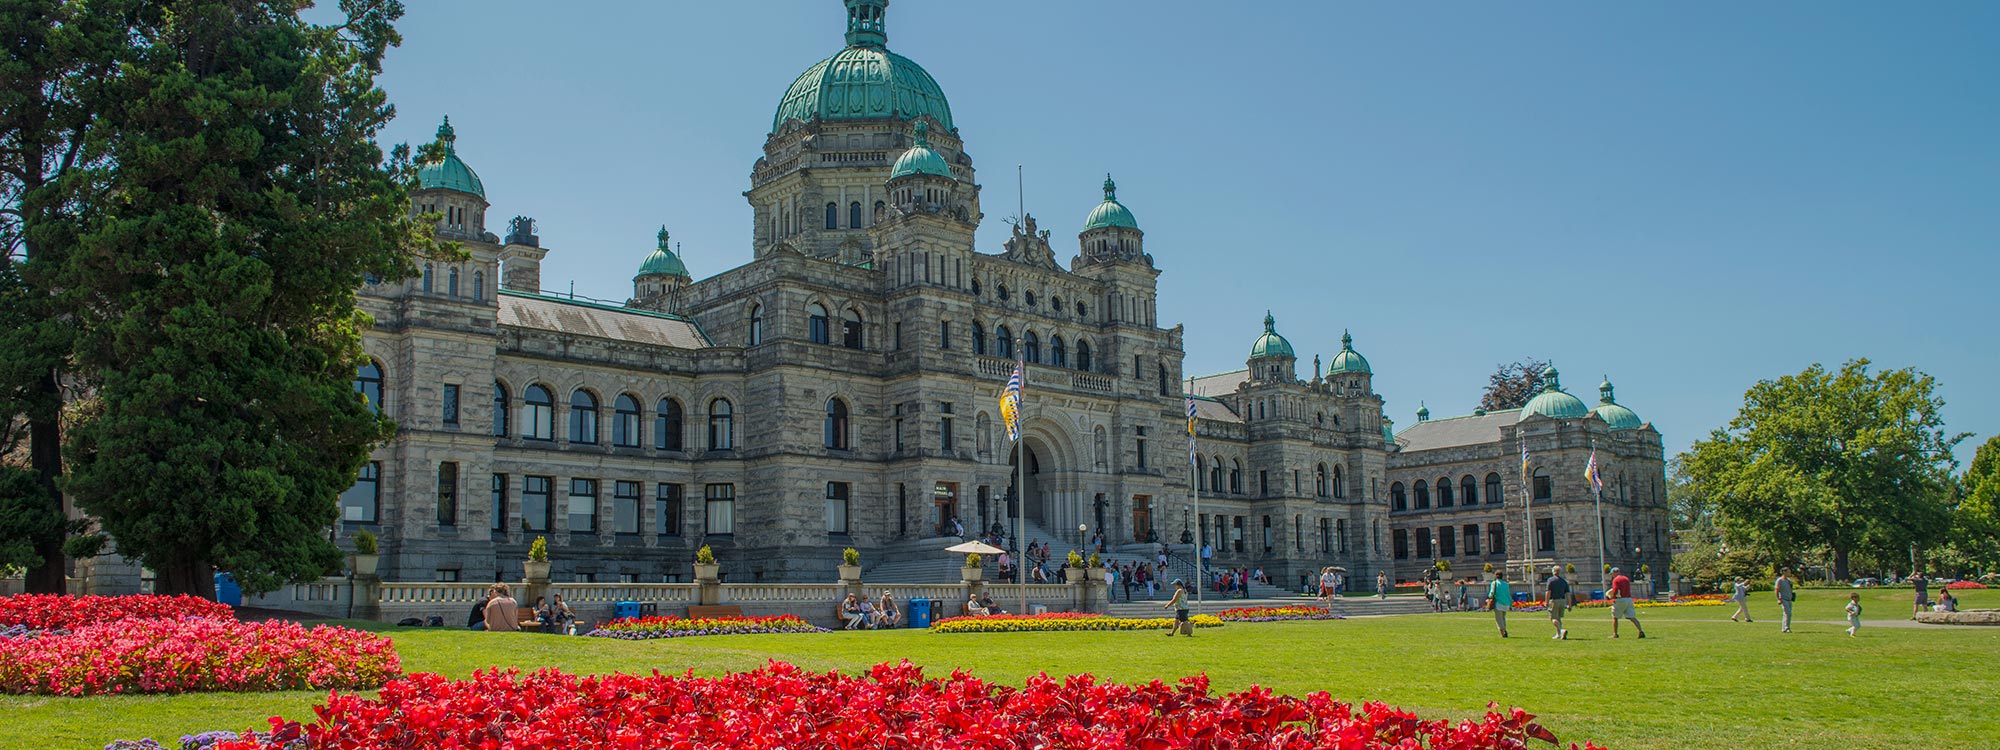 Parliament building, Victoria, BC